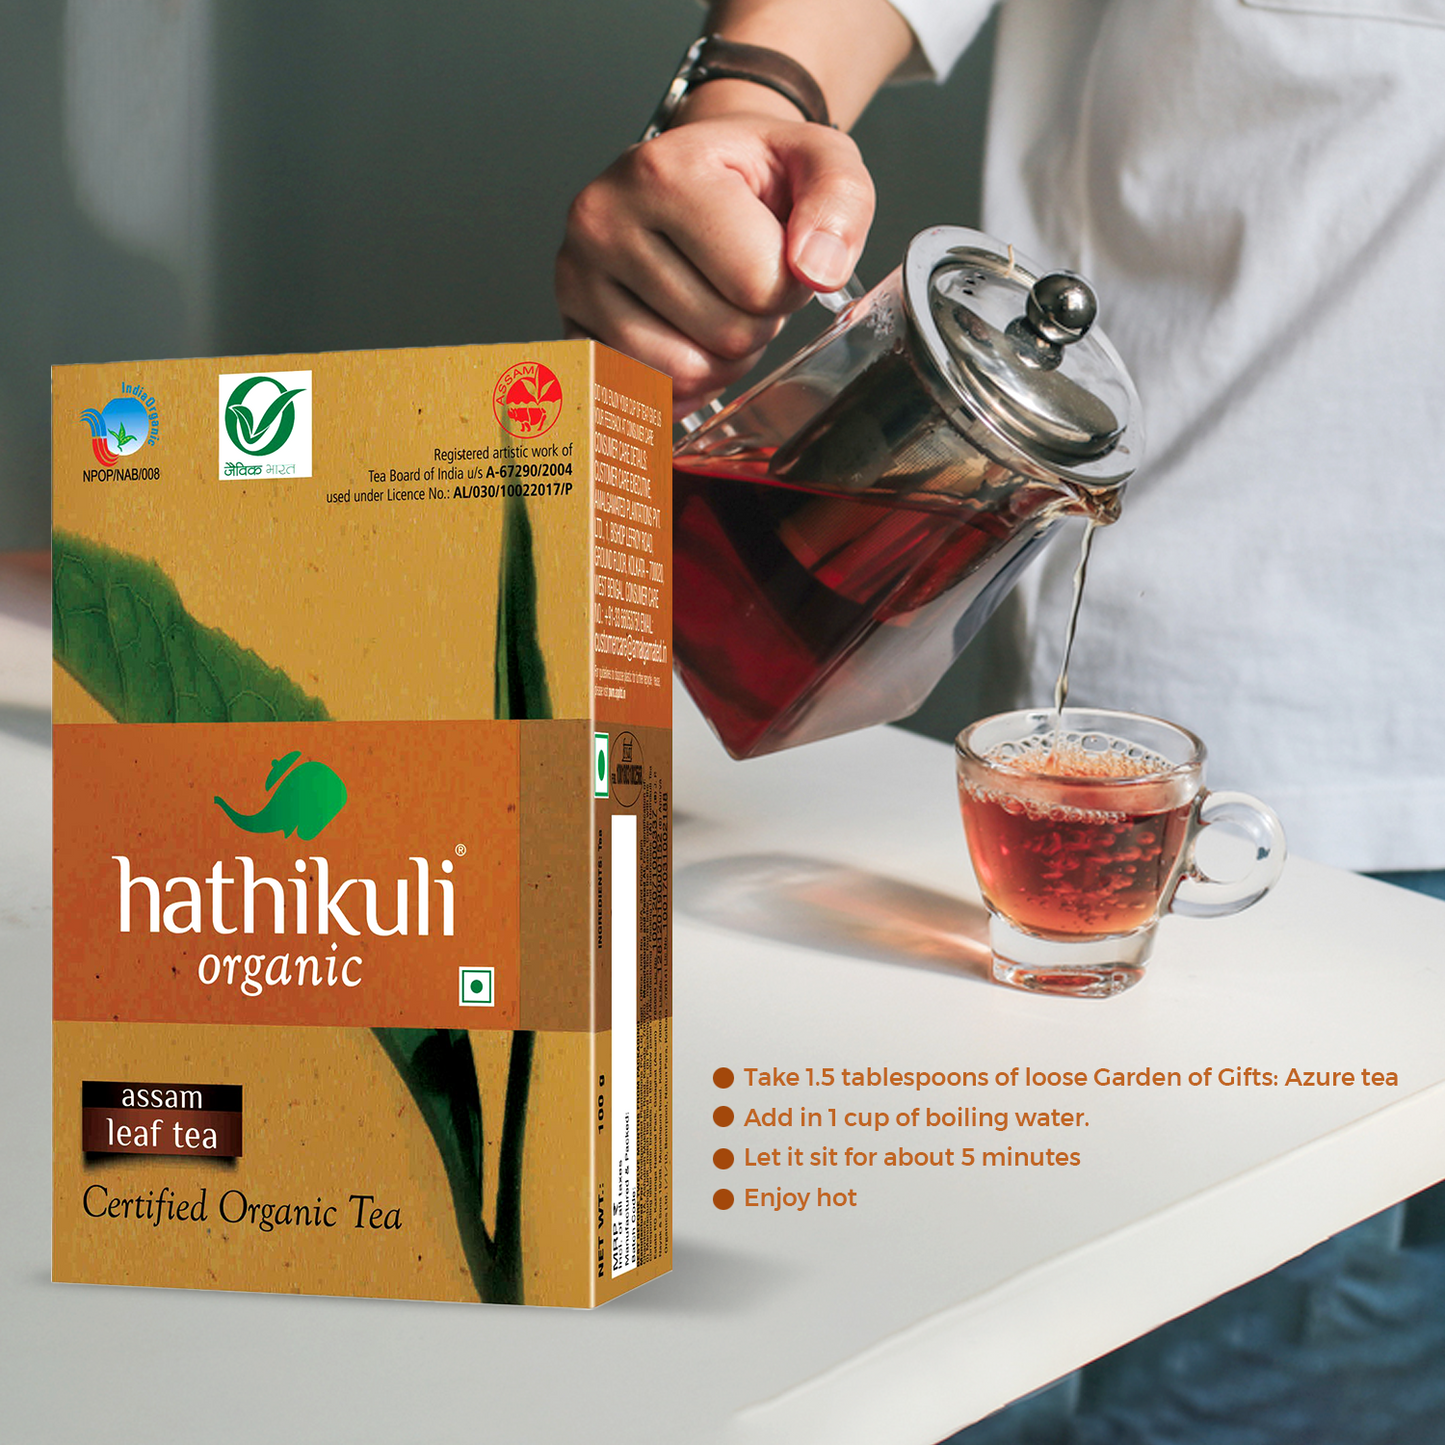 Hathikuli Organic Orthodox Tea